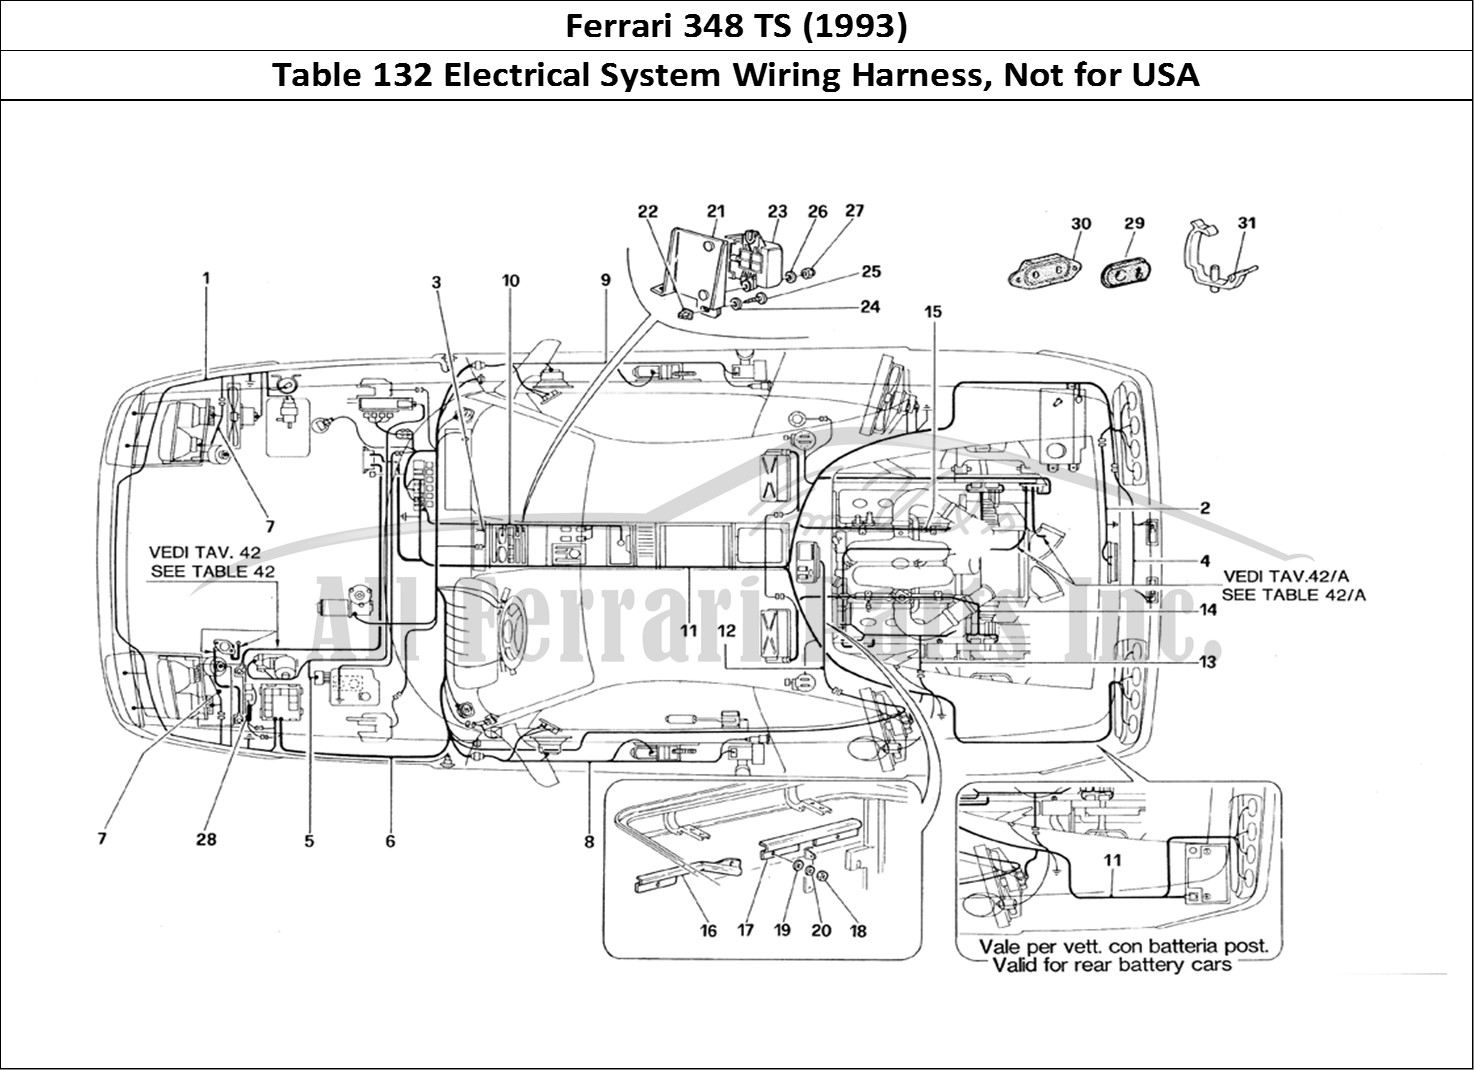 Ferrari Parts Ferrari 348 TB (1993) Page 132 Electrical System - Not f